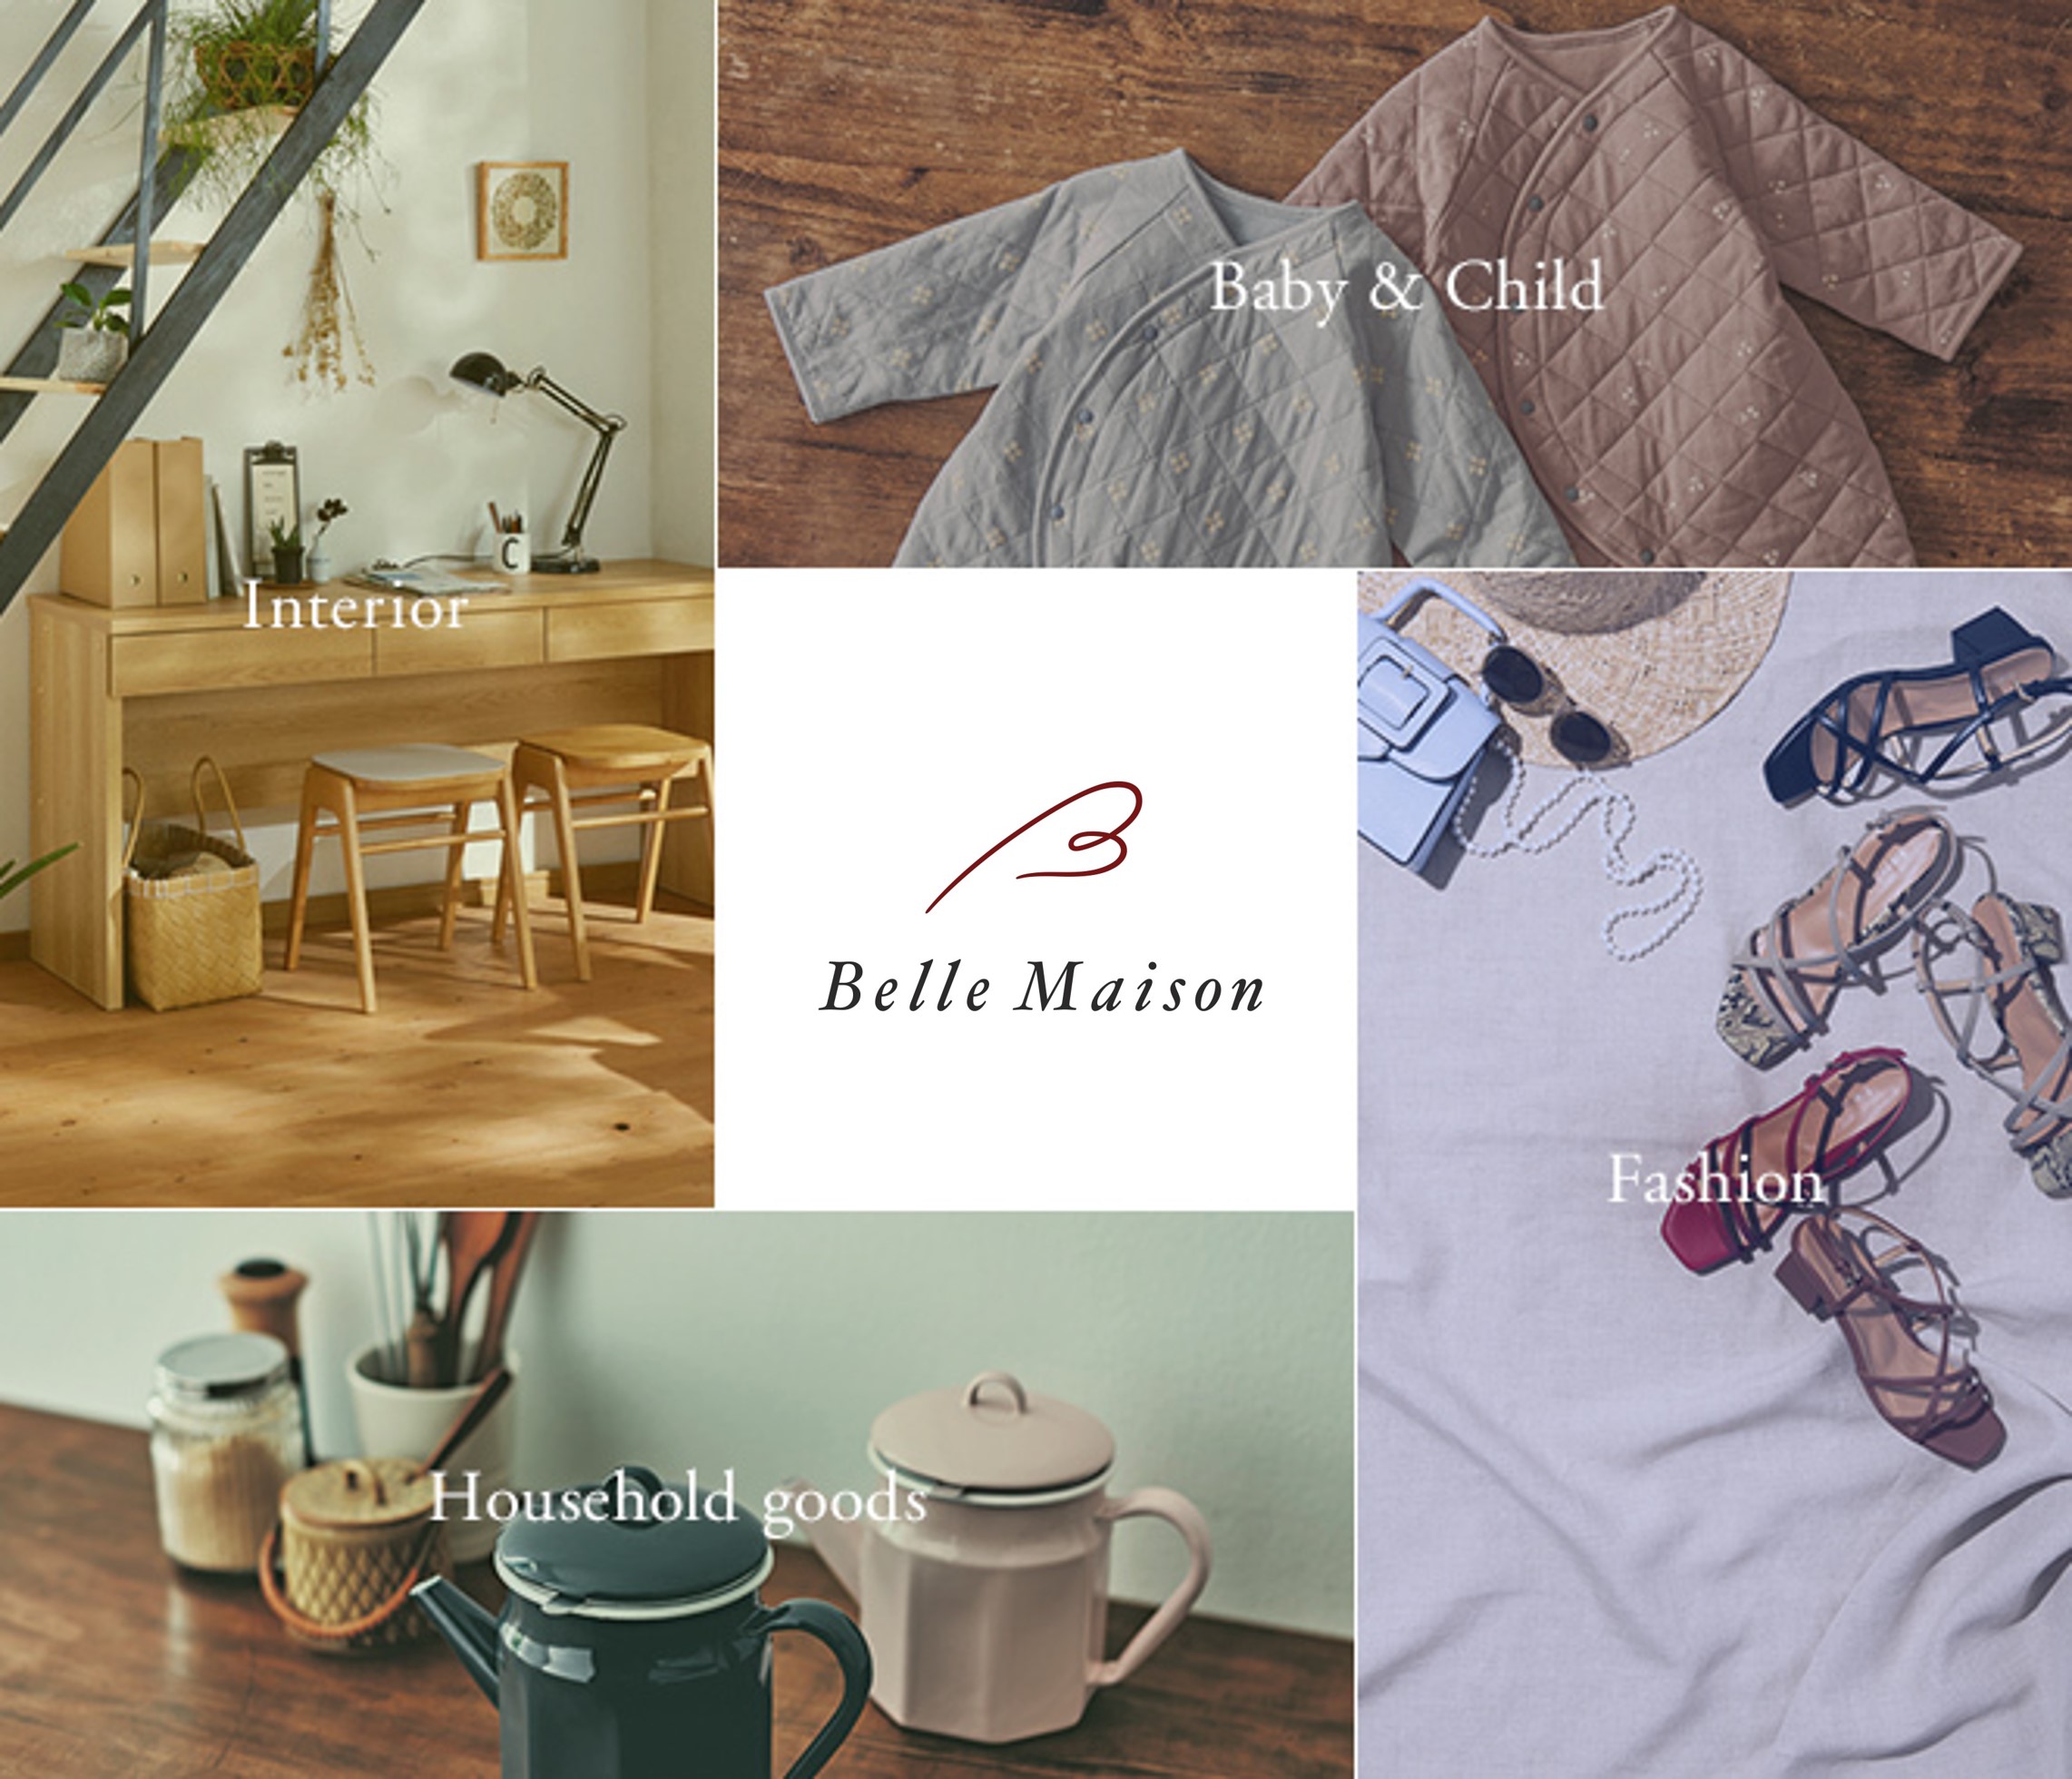 Interior　Baby & Child　Fashion　Household goods